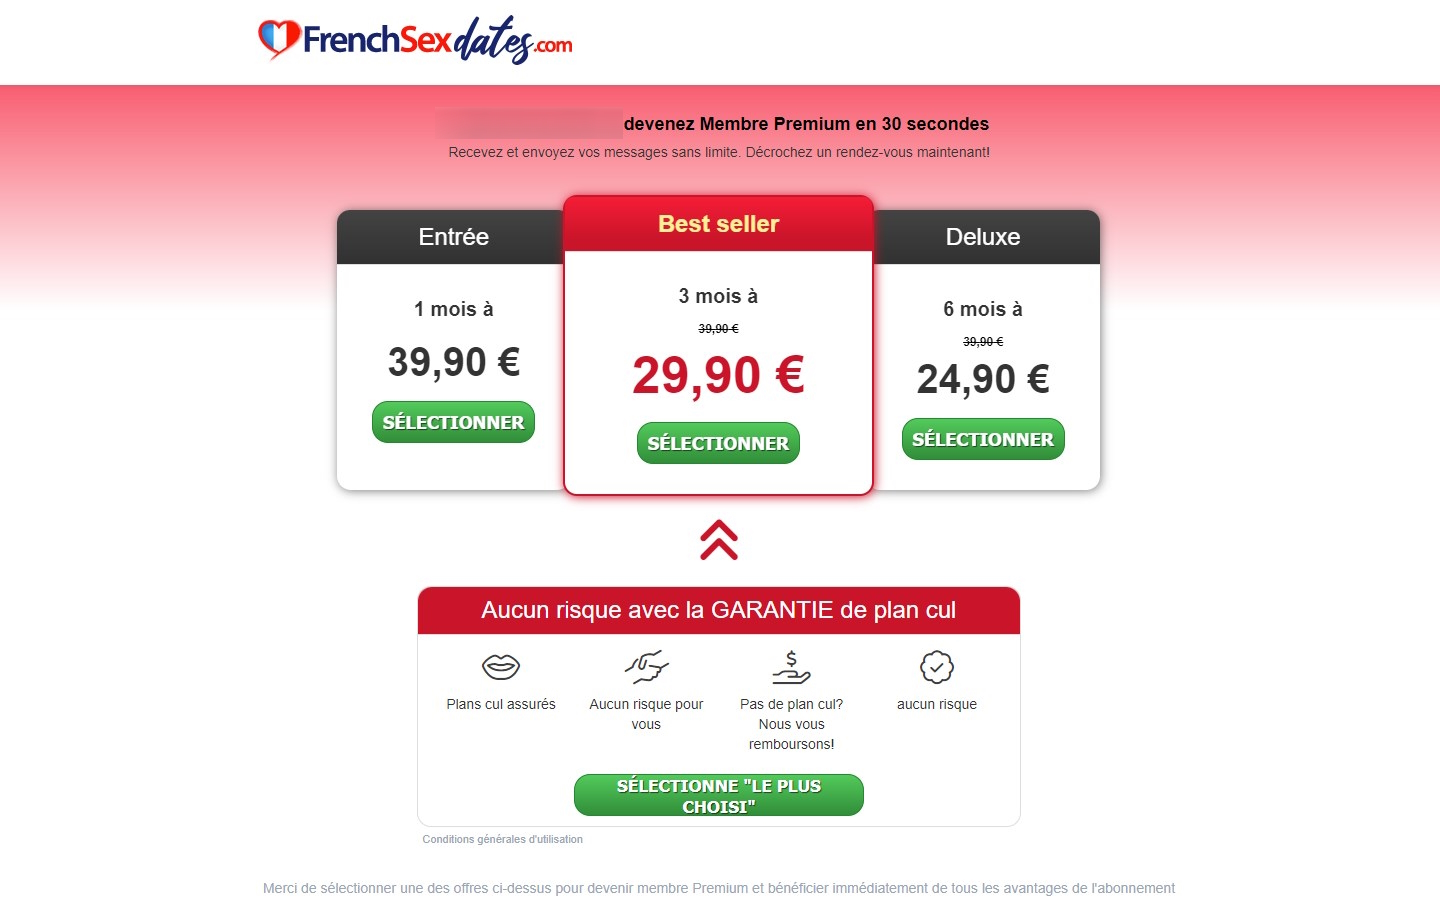 FrenchSexDates.com tarifs